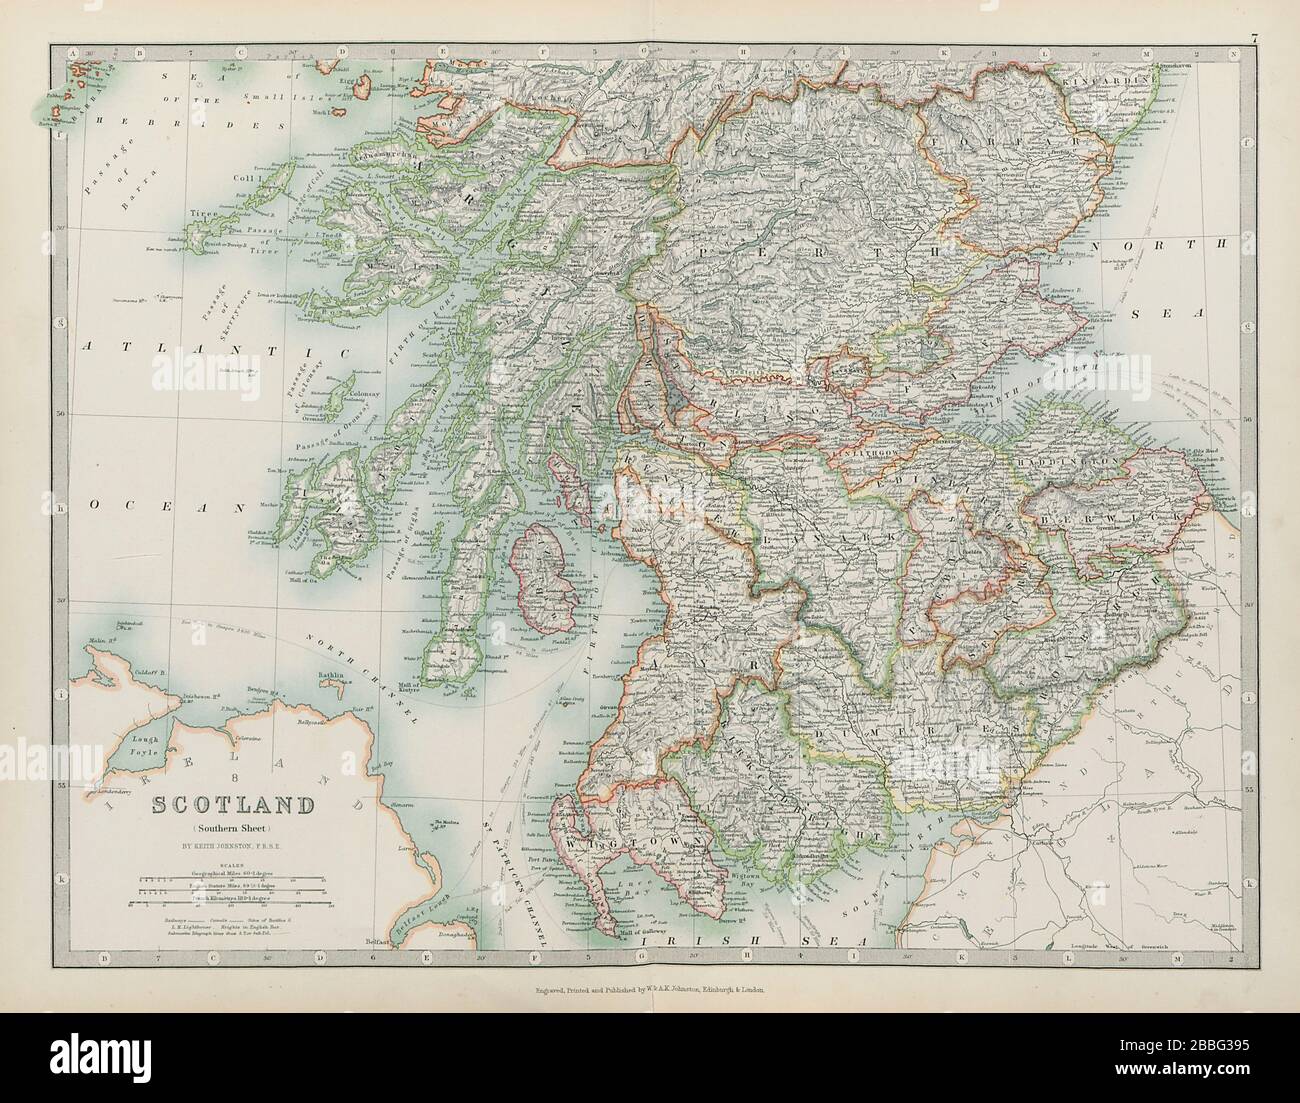 SCOTLAND SOUTH Borders Argyll Perthshire Fife Forfar Lanark JOHNSTON 1901 map Stock Photo